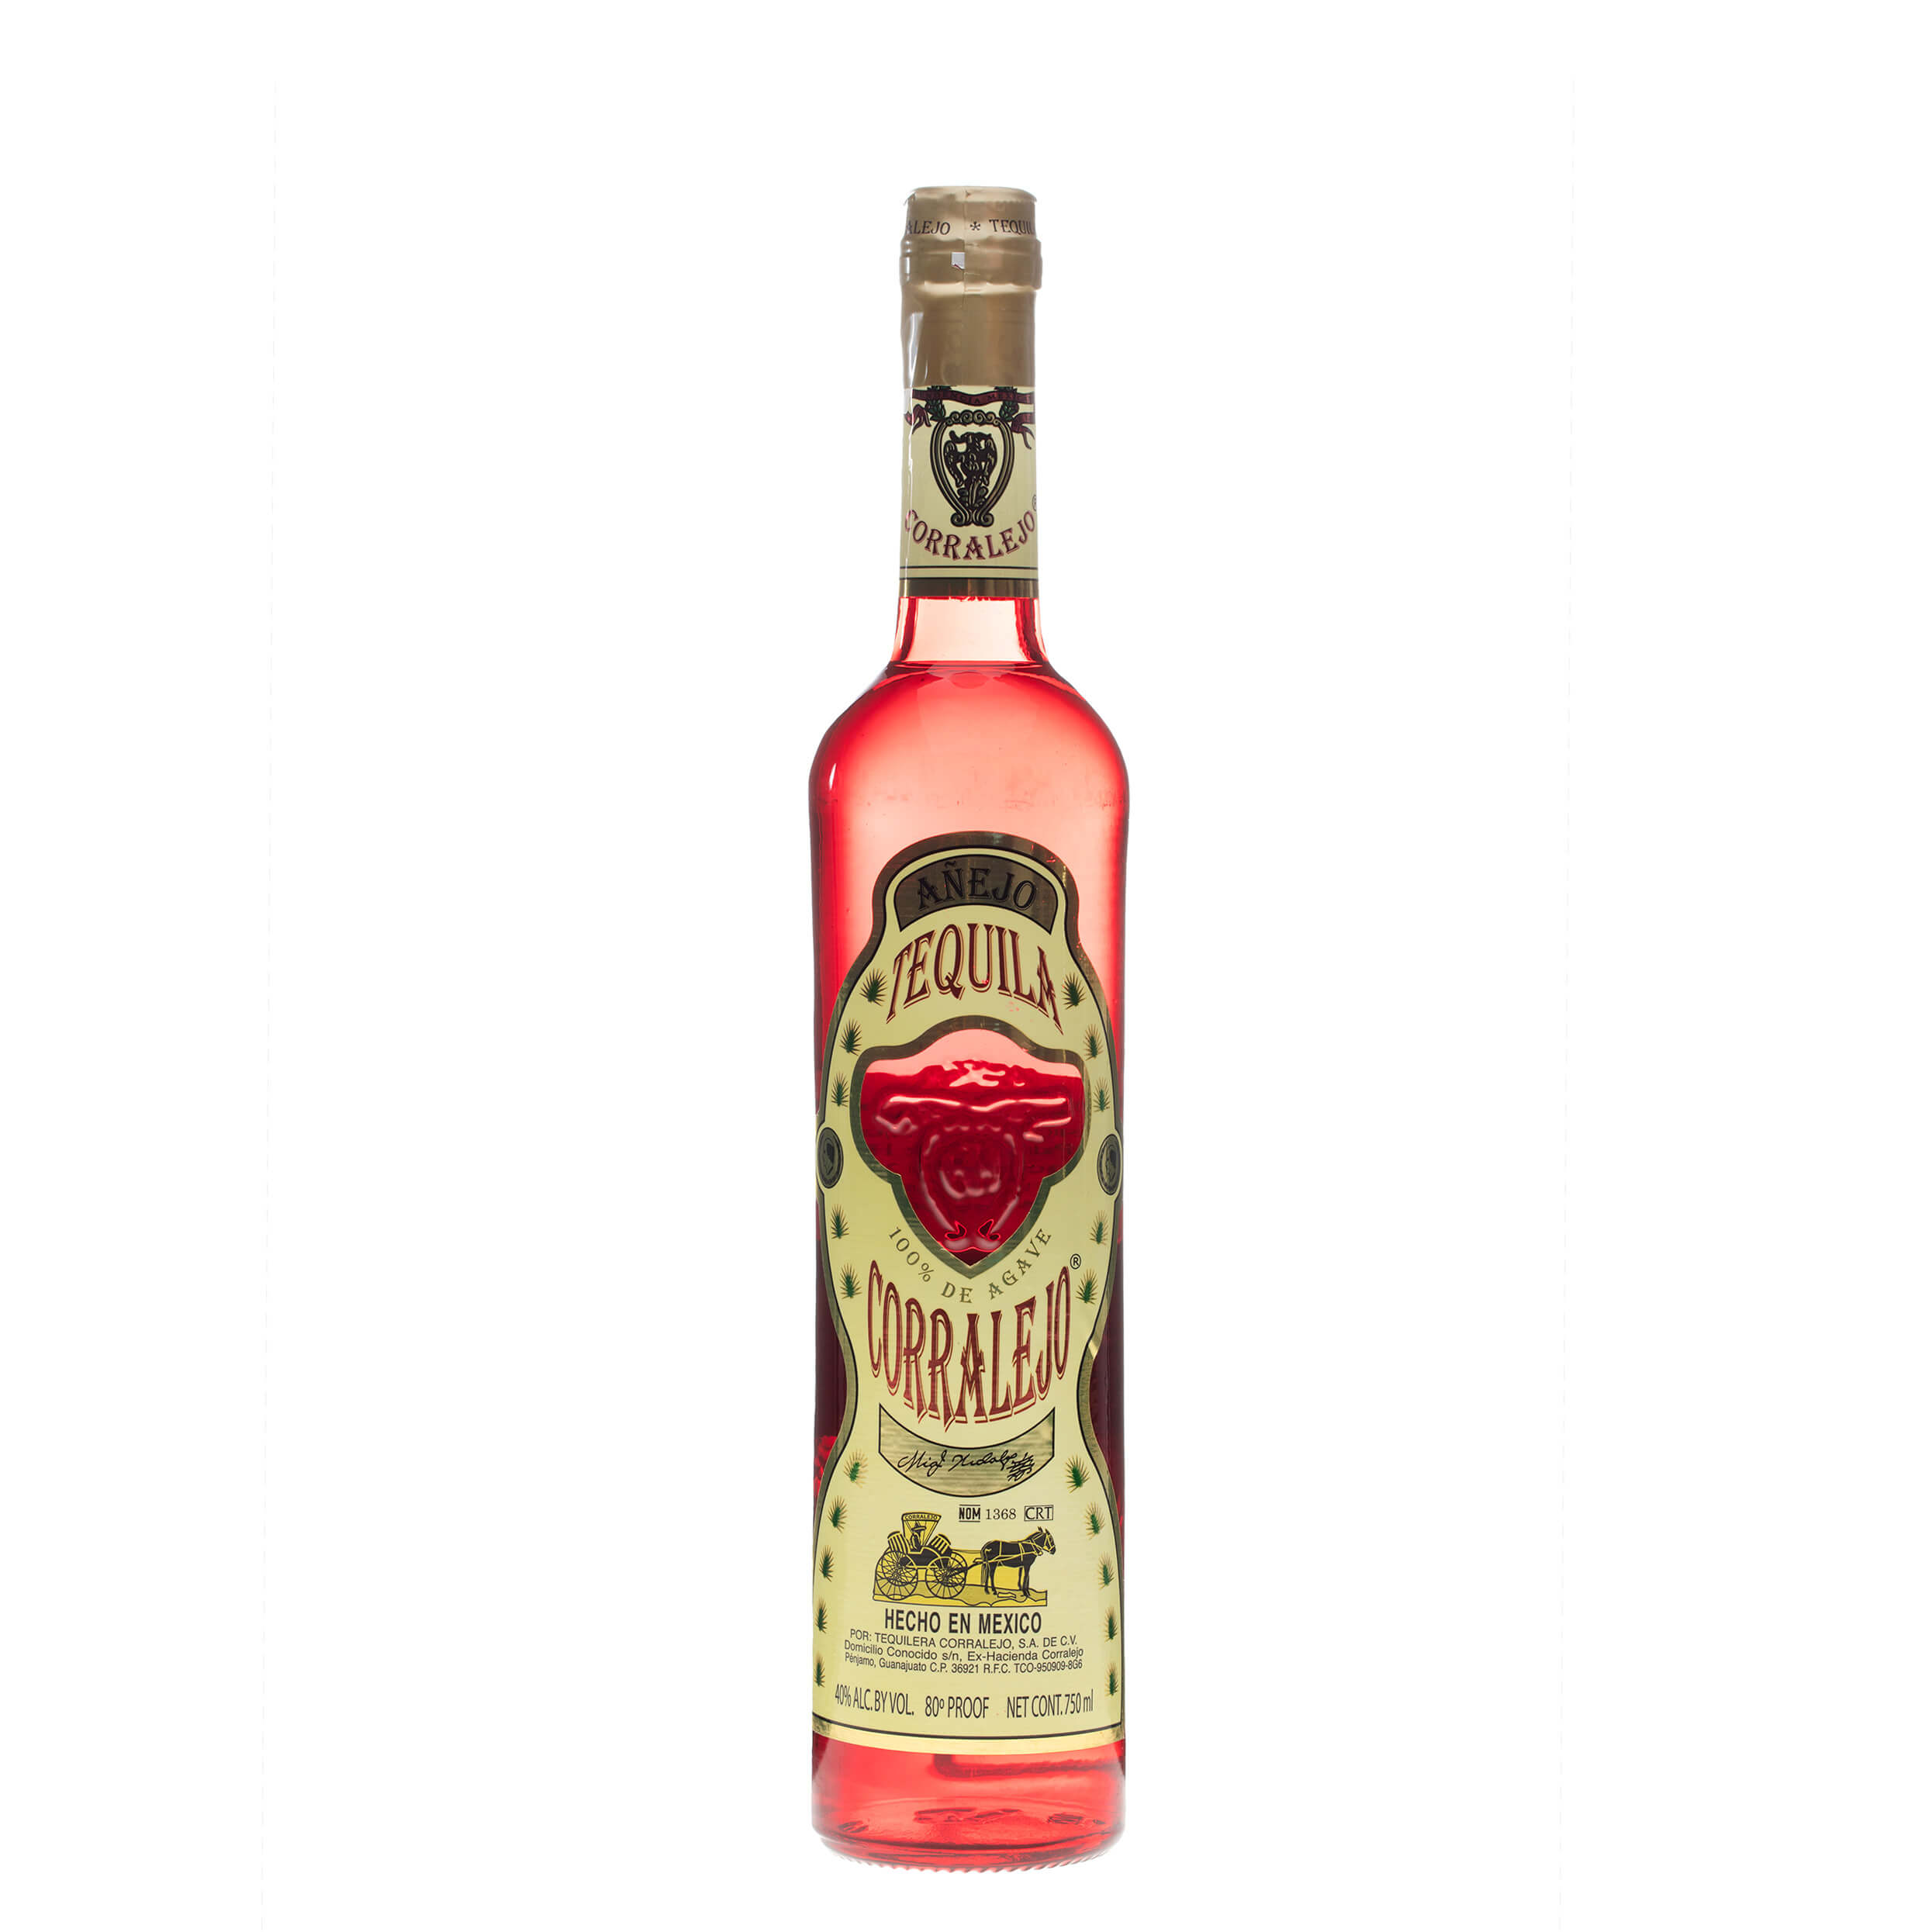 Product image for “Tequila Corralejo Anejo”